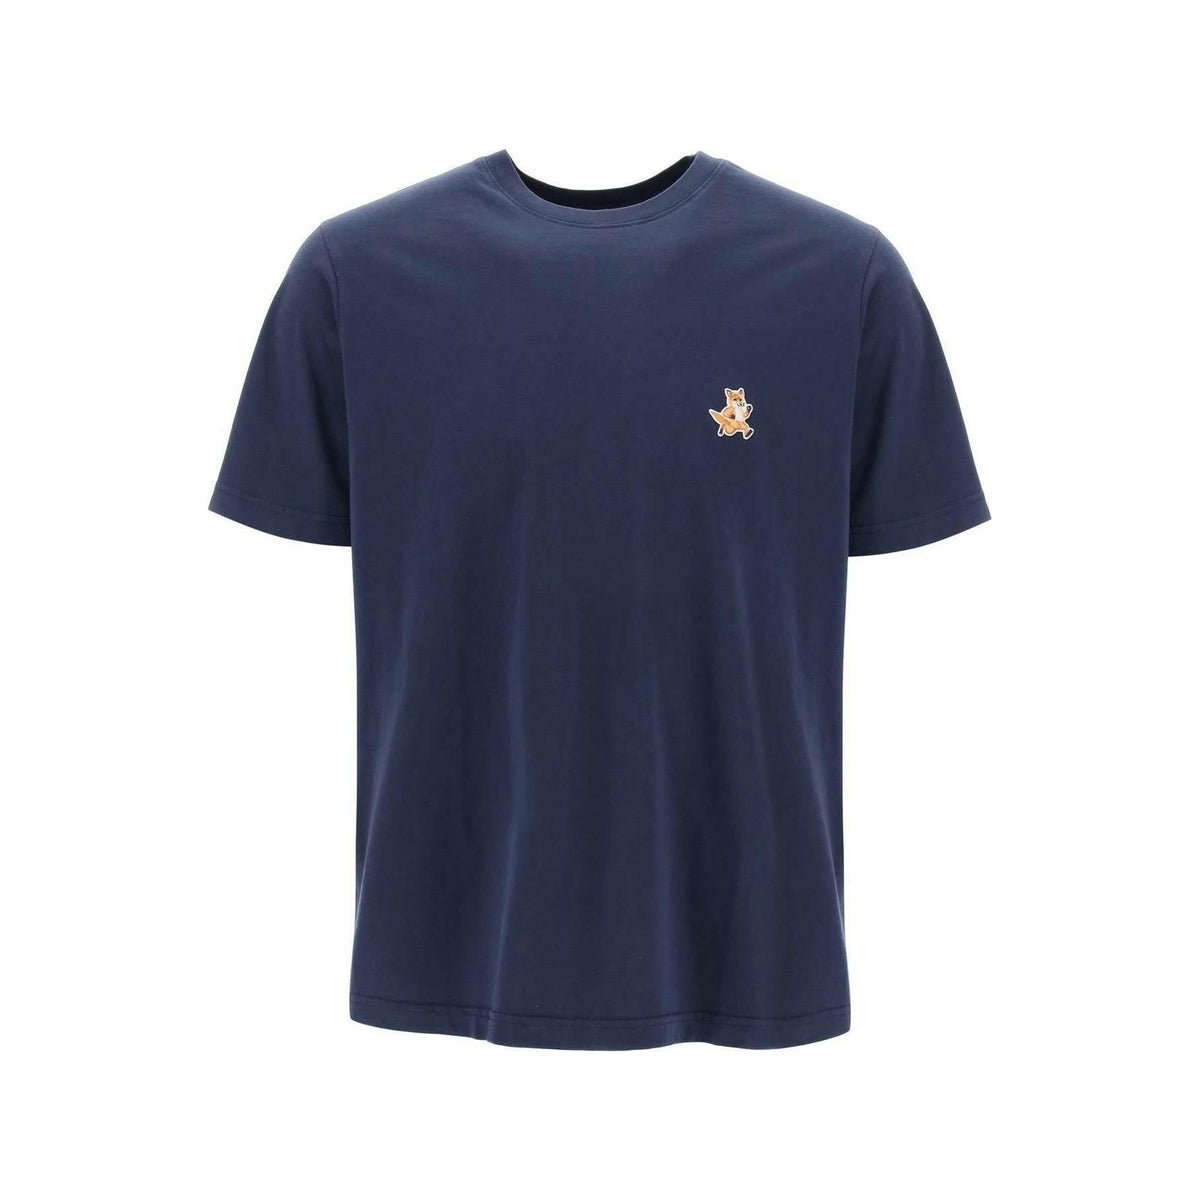 MAISON KITSUNE - Ink Blue Speedy Fox Comfort Fit Cotton T-Shirt - JOHN JULIA